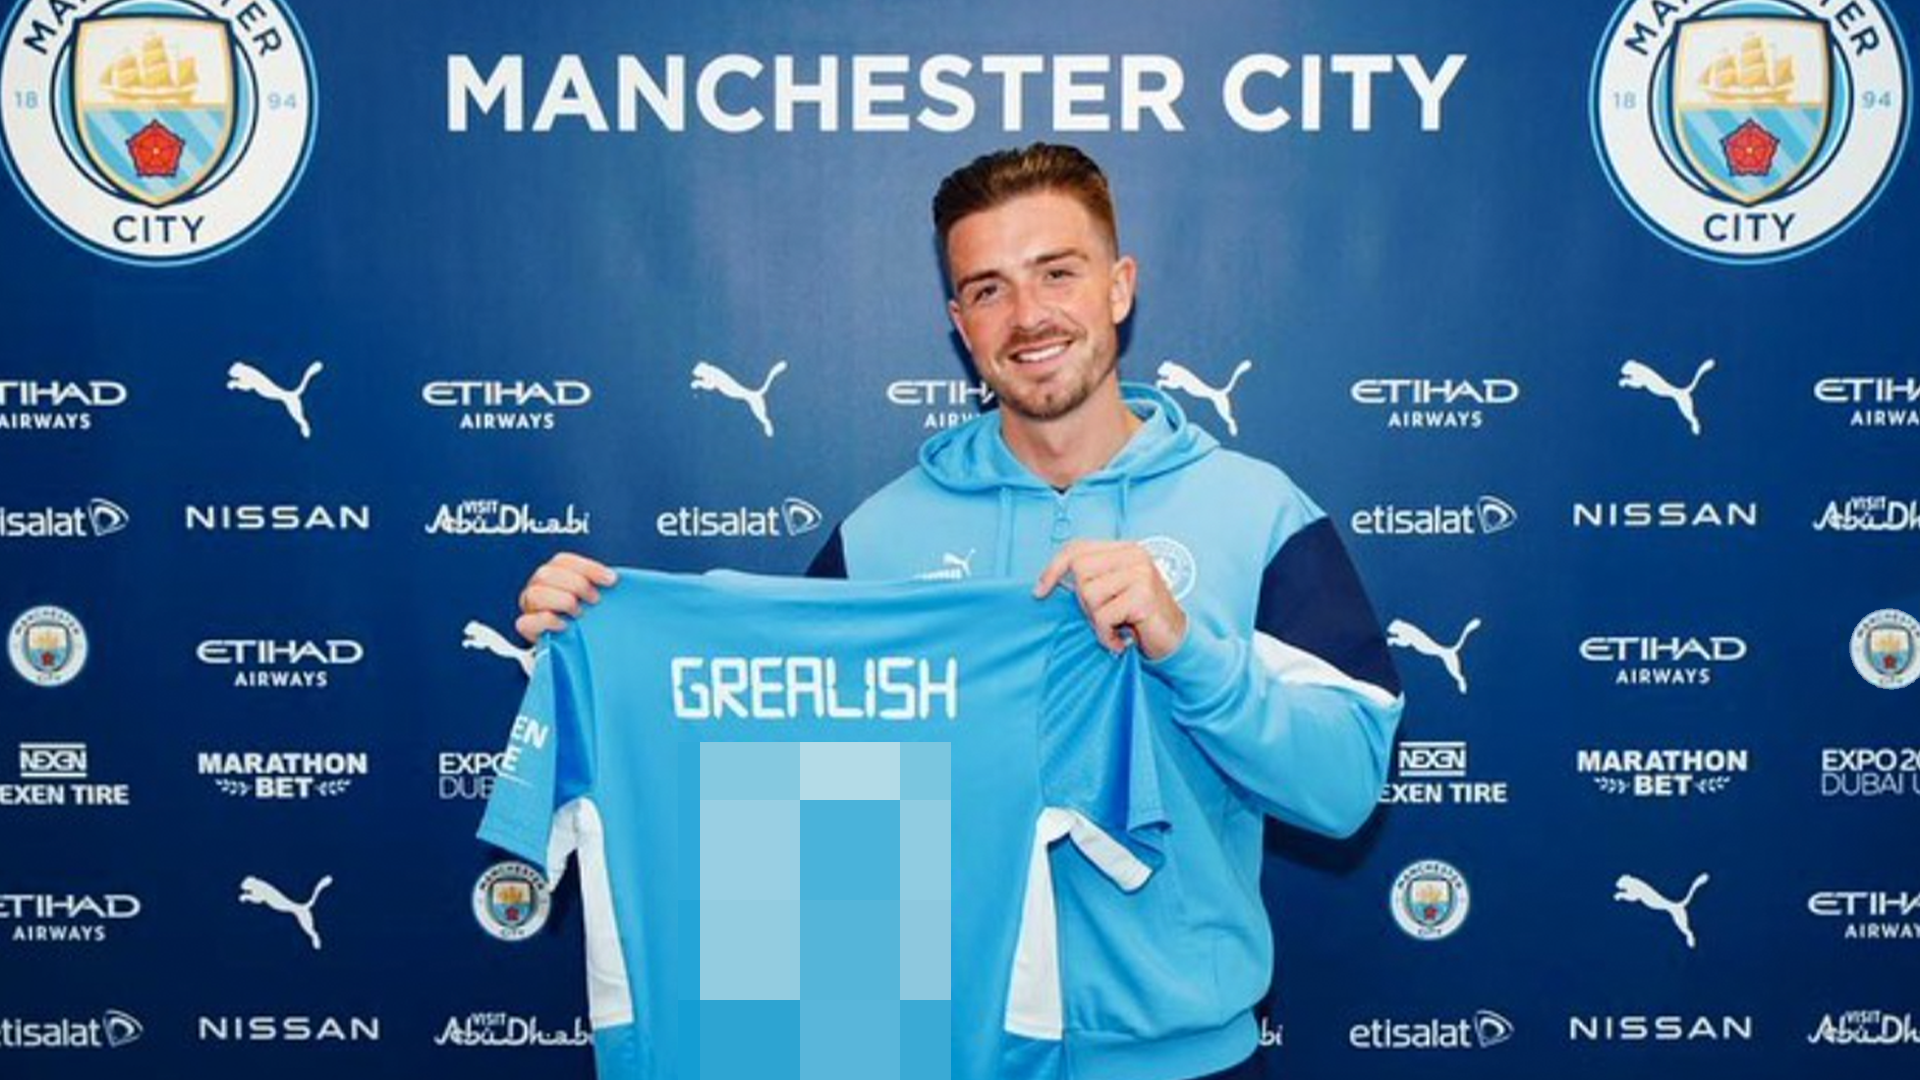 Jack Grealish holding up a Manchester City shirt